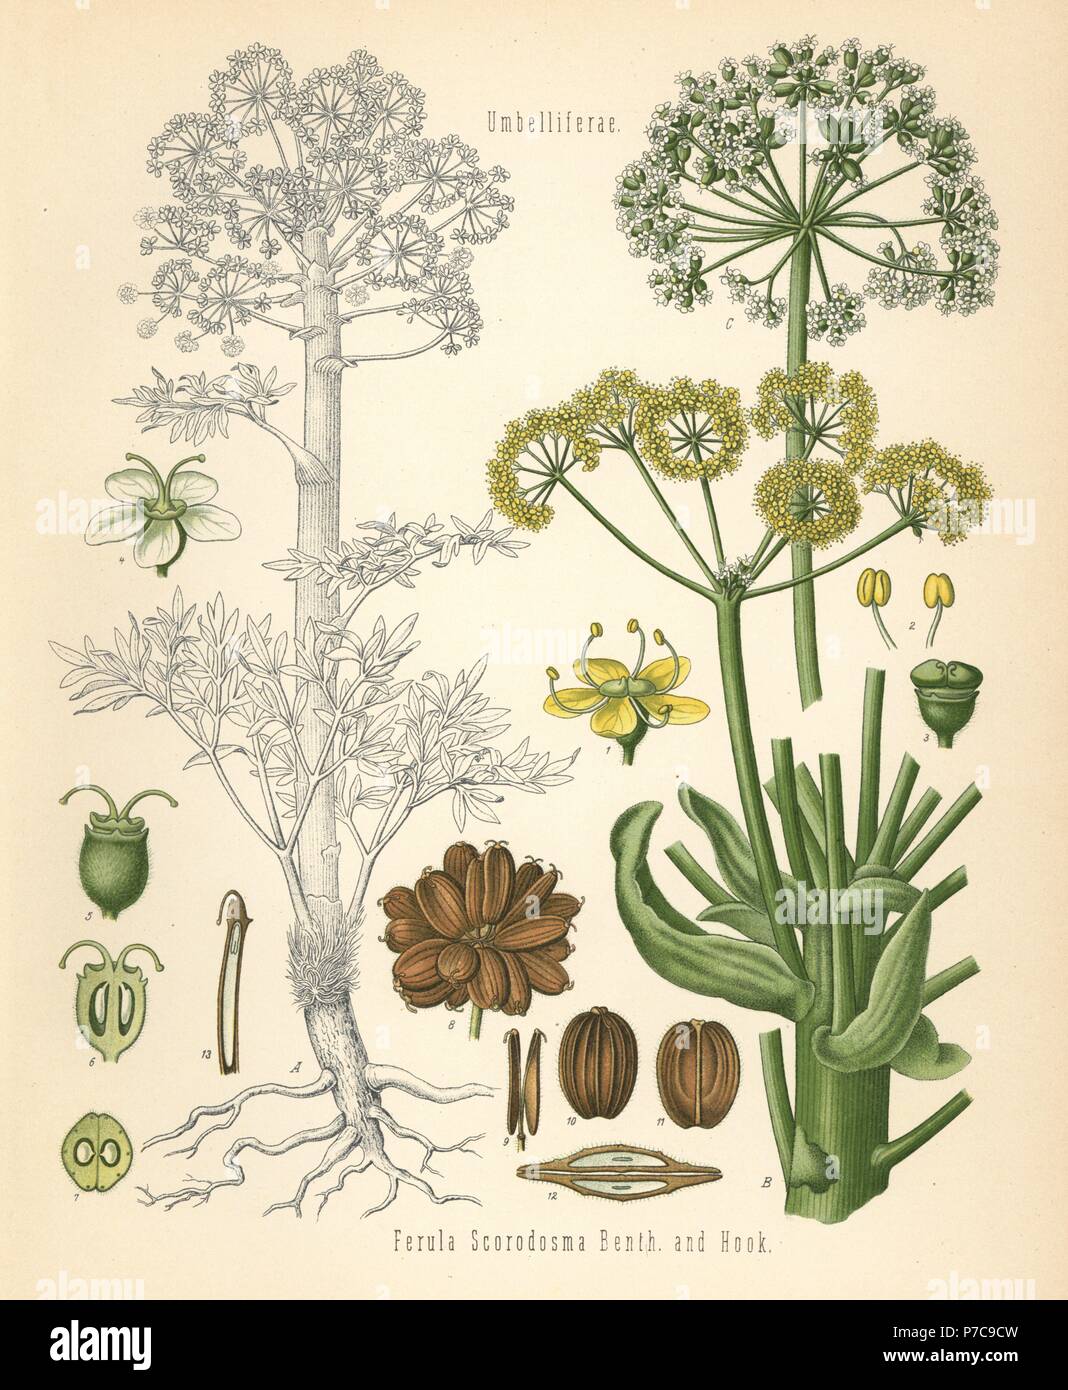 Asafoetida, Ferula foetida (Ferula scorodosma). Chromolithograph after a botanical illustration from Hermann Adolph Koehler's Medicinal Plants, edited by Gustav Pabst, Koehler, Germany, 1887. Stock Photo